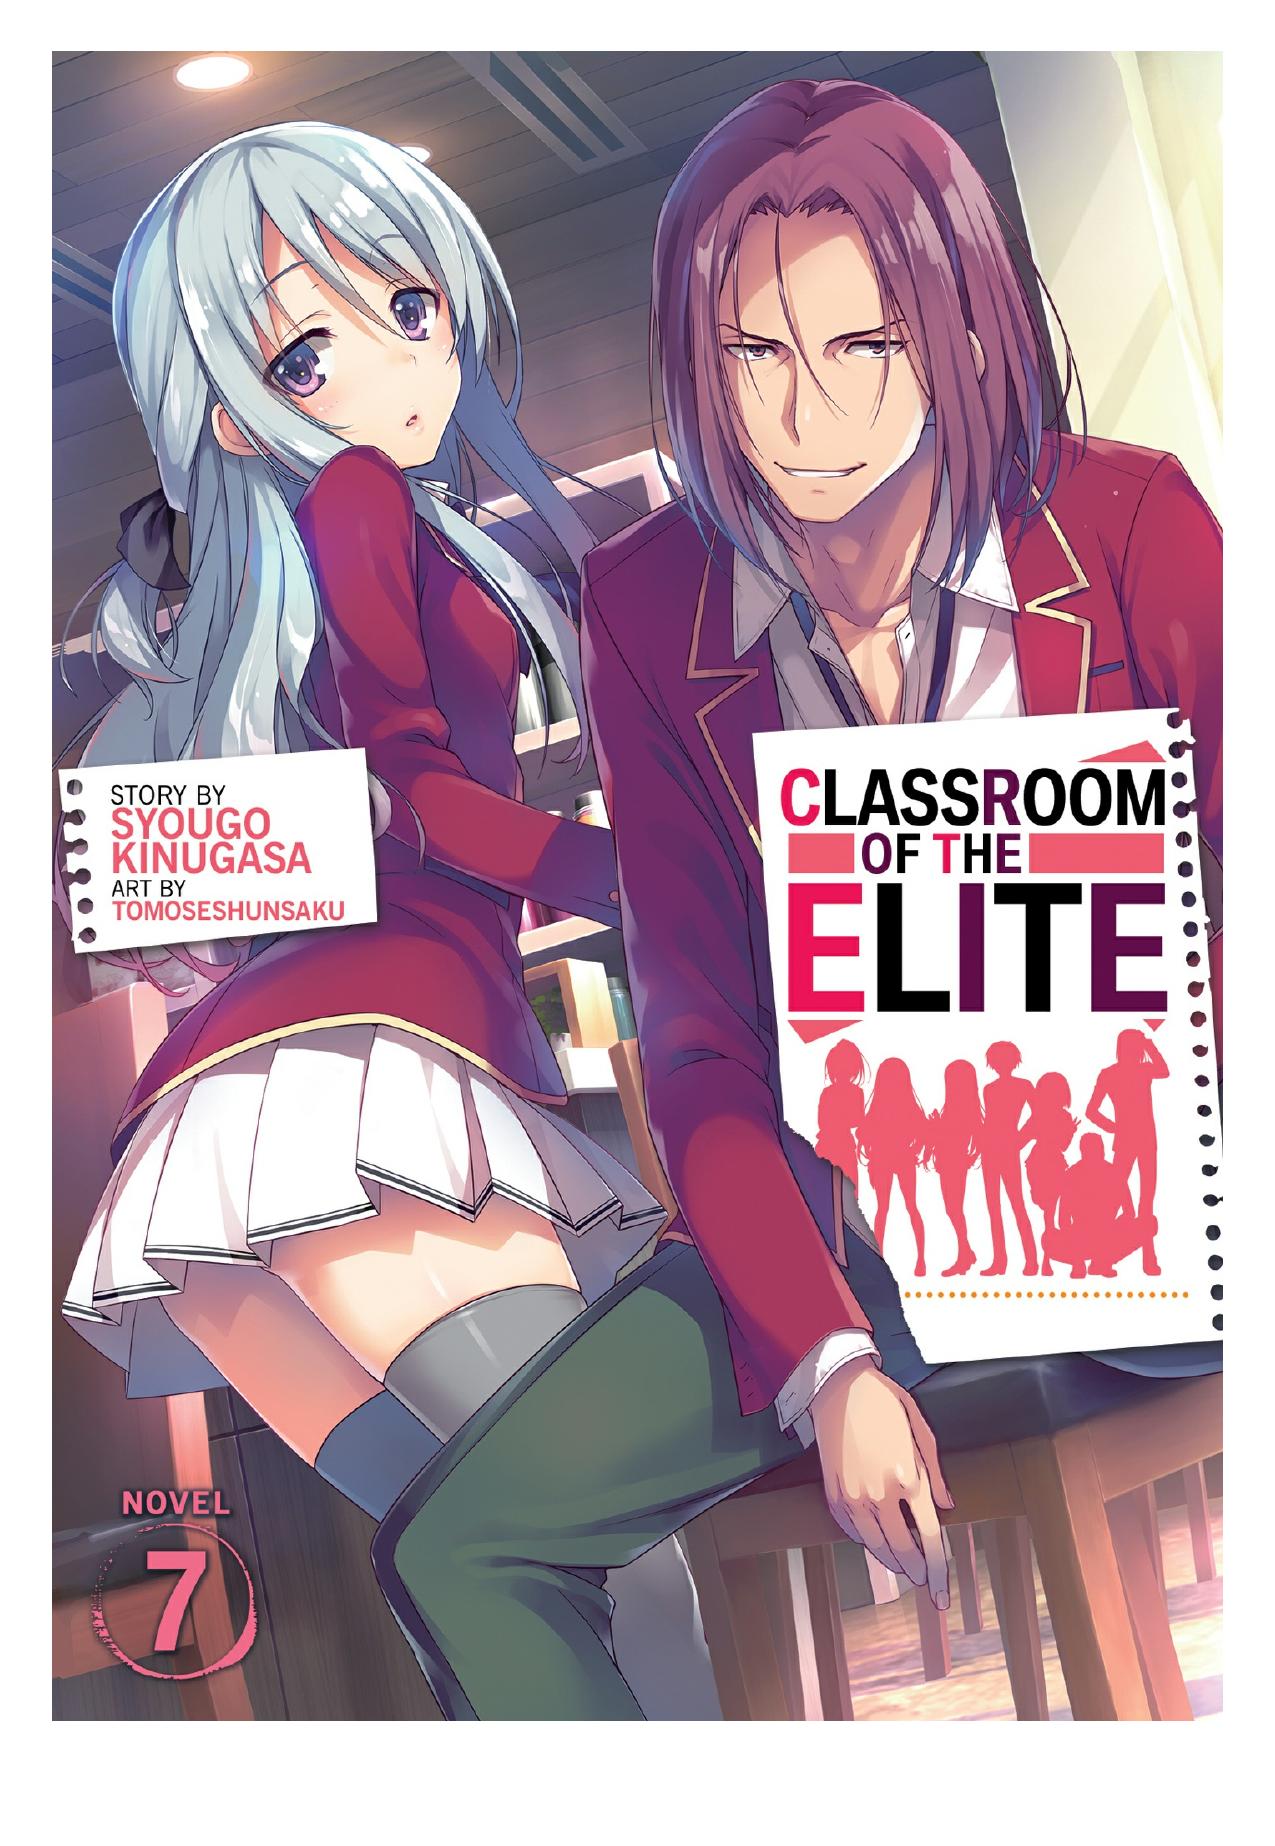 Classroom of the Elite Vol. 7 by Syougo Kinugasa